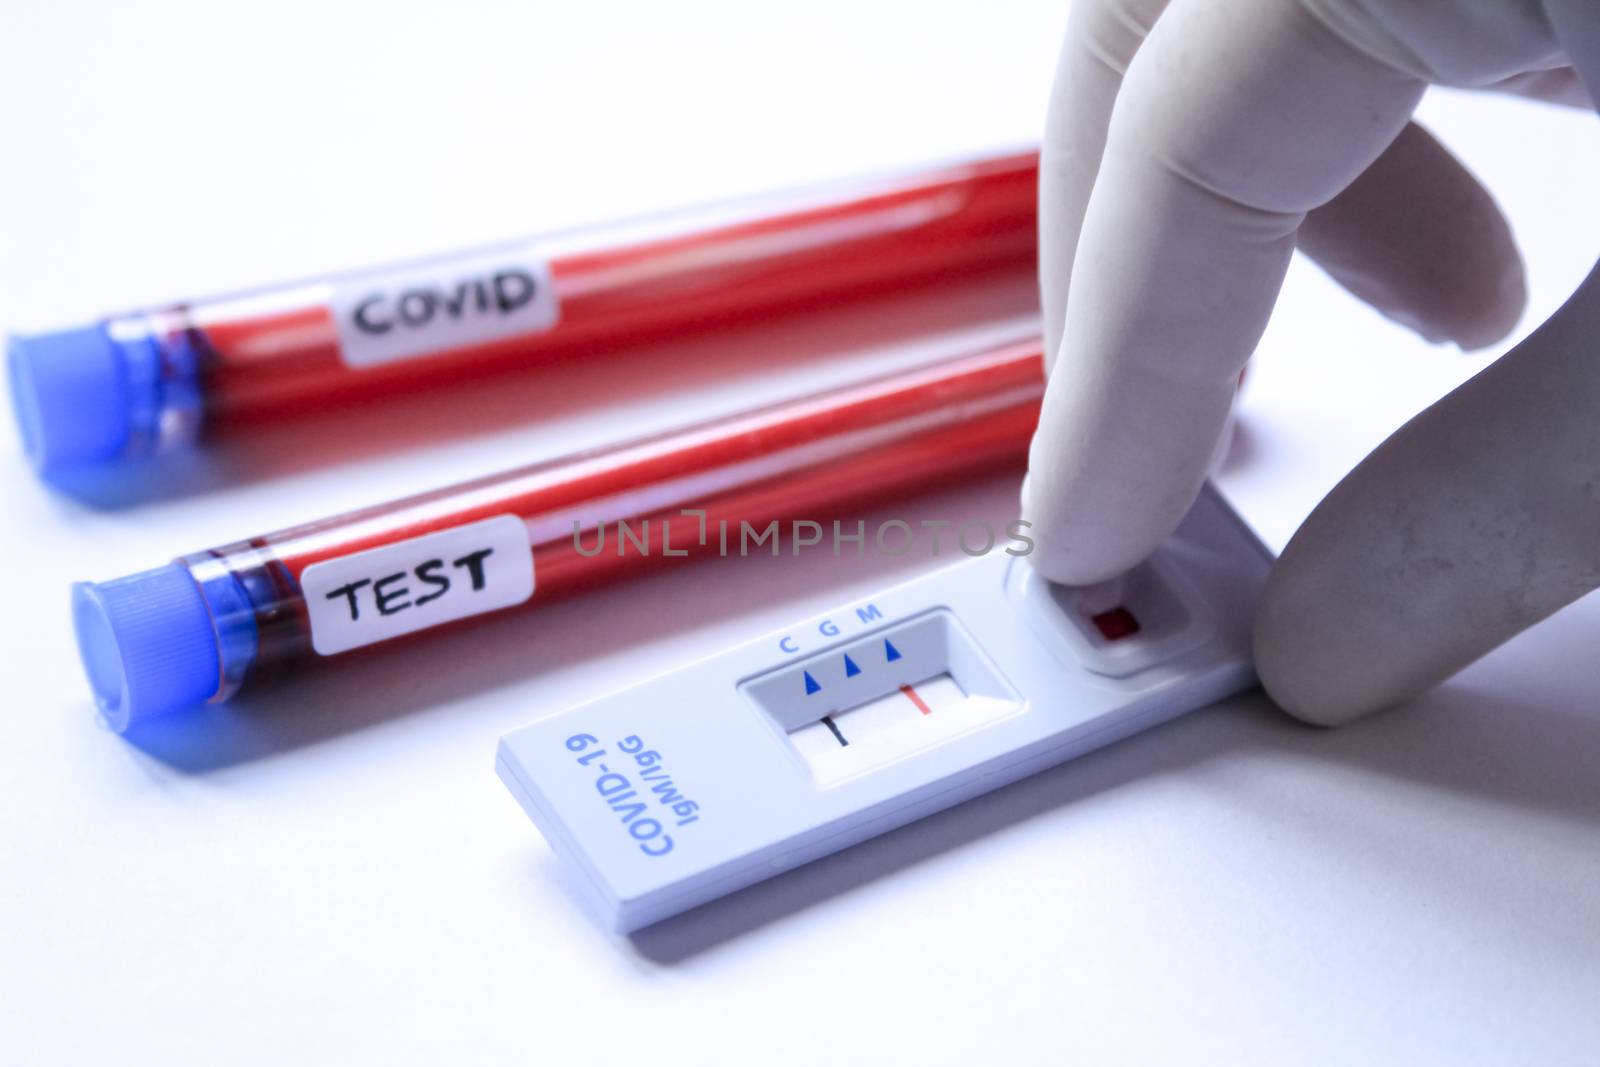 Medical worker placing blood sample on Rapid Diagnostic Test by soniabonet